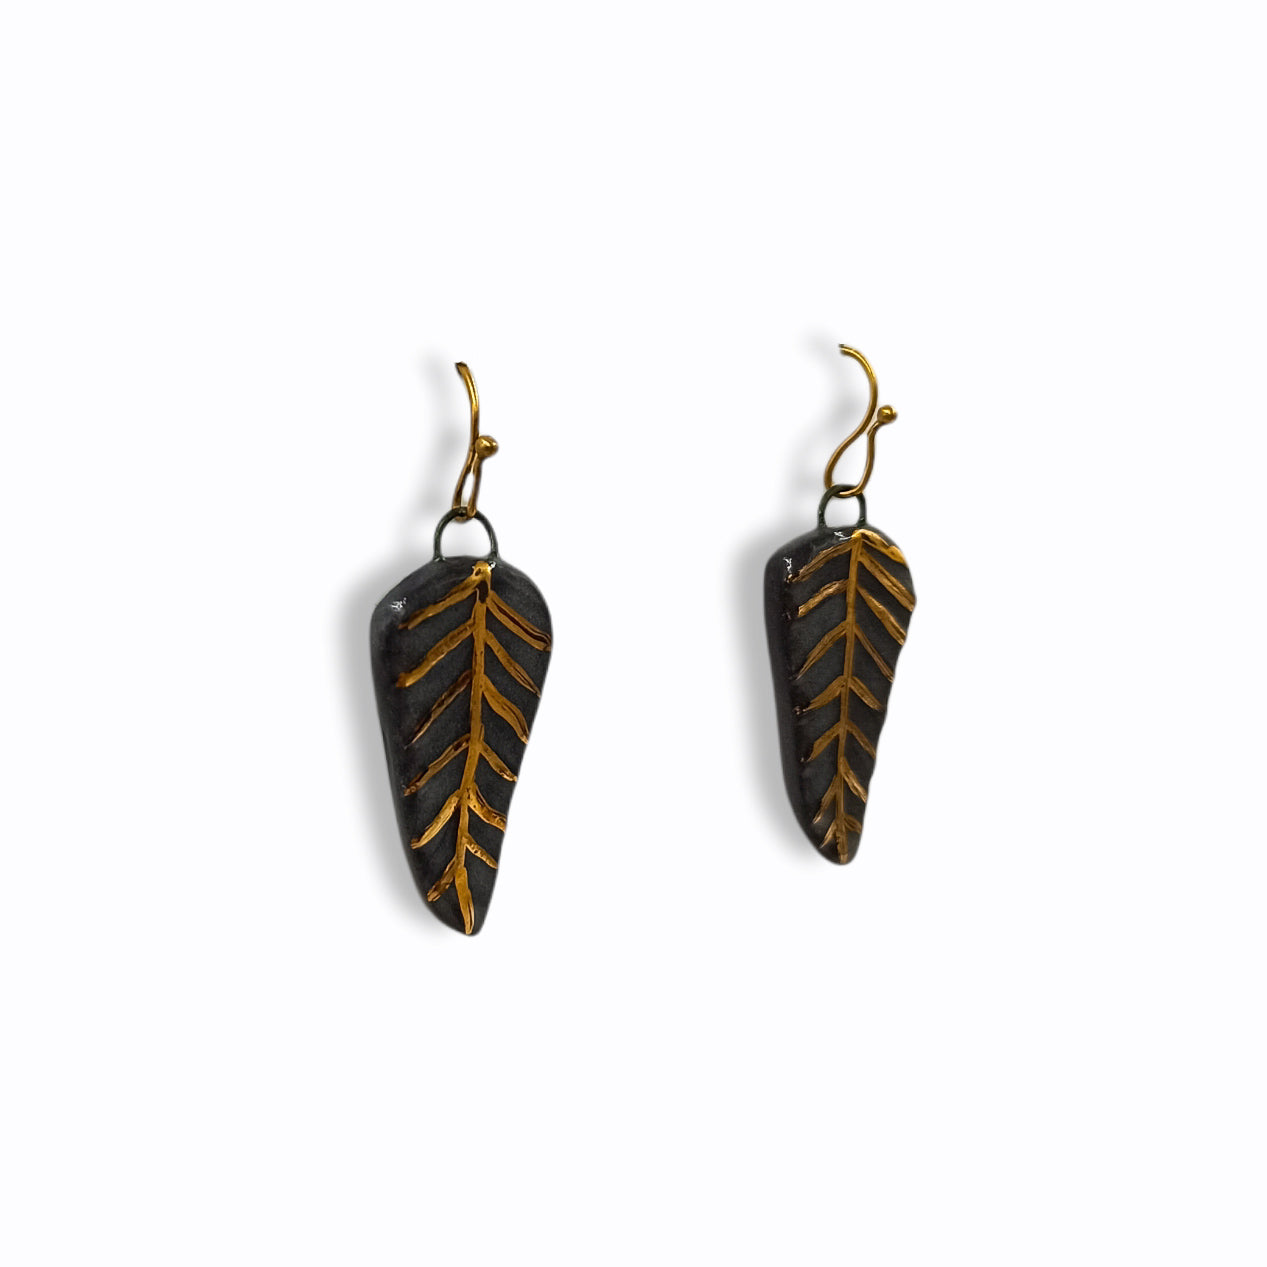 Handmade Dangle Earrings "Leaf"